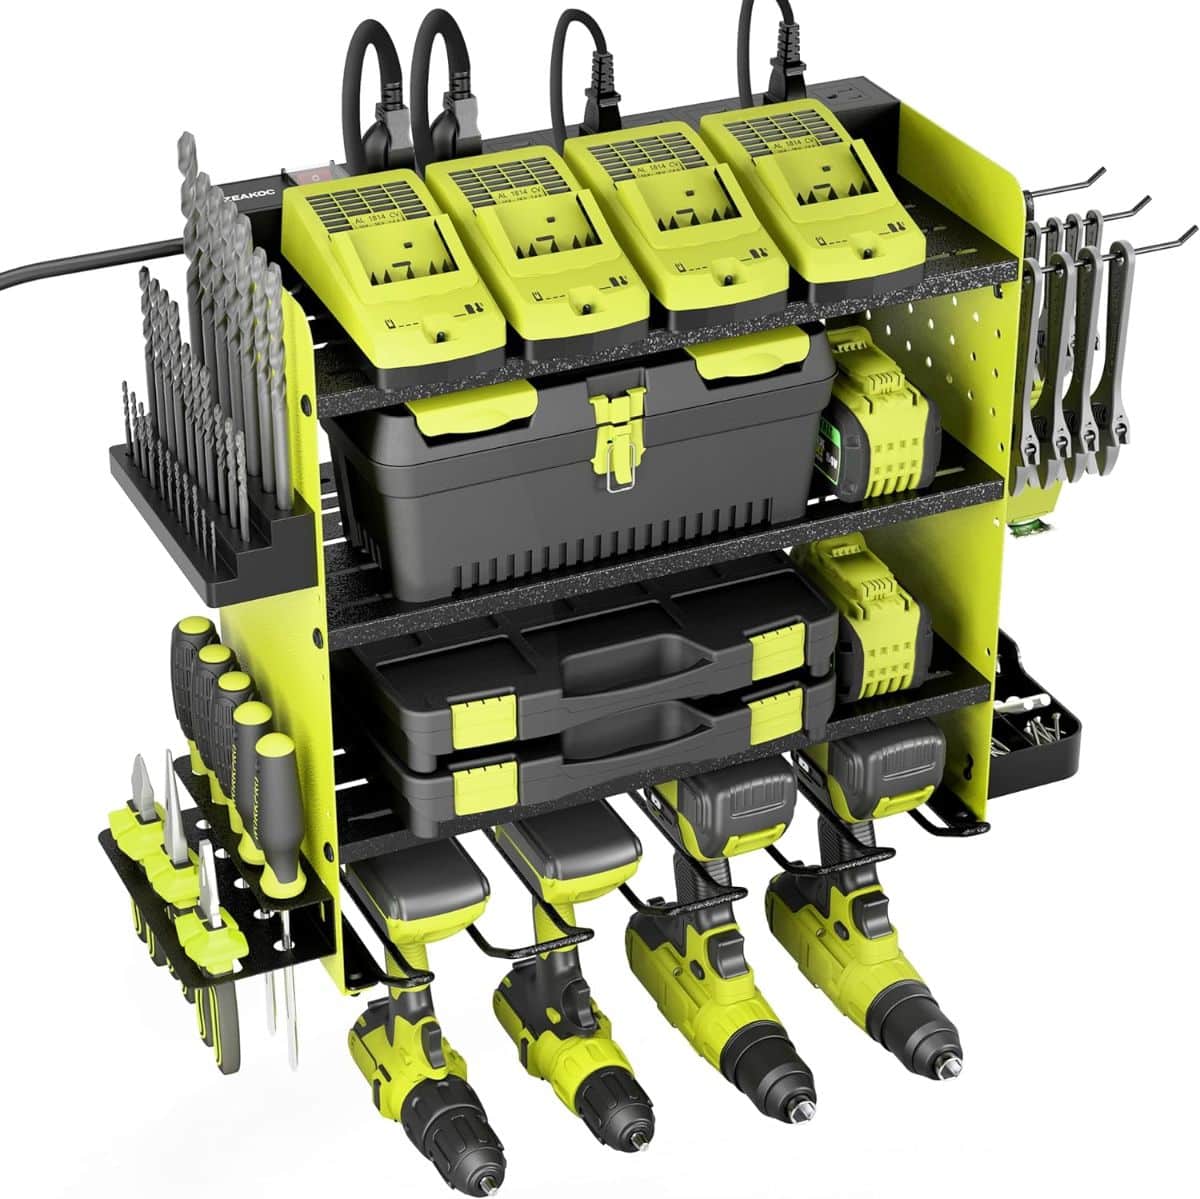 ZEAKOC Power Tool Storage Rack with Charging Station